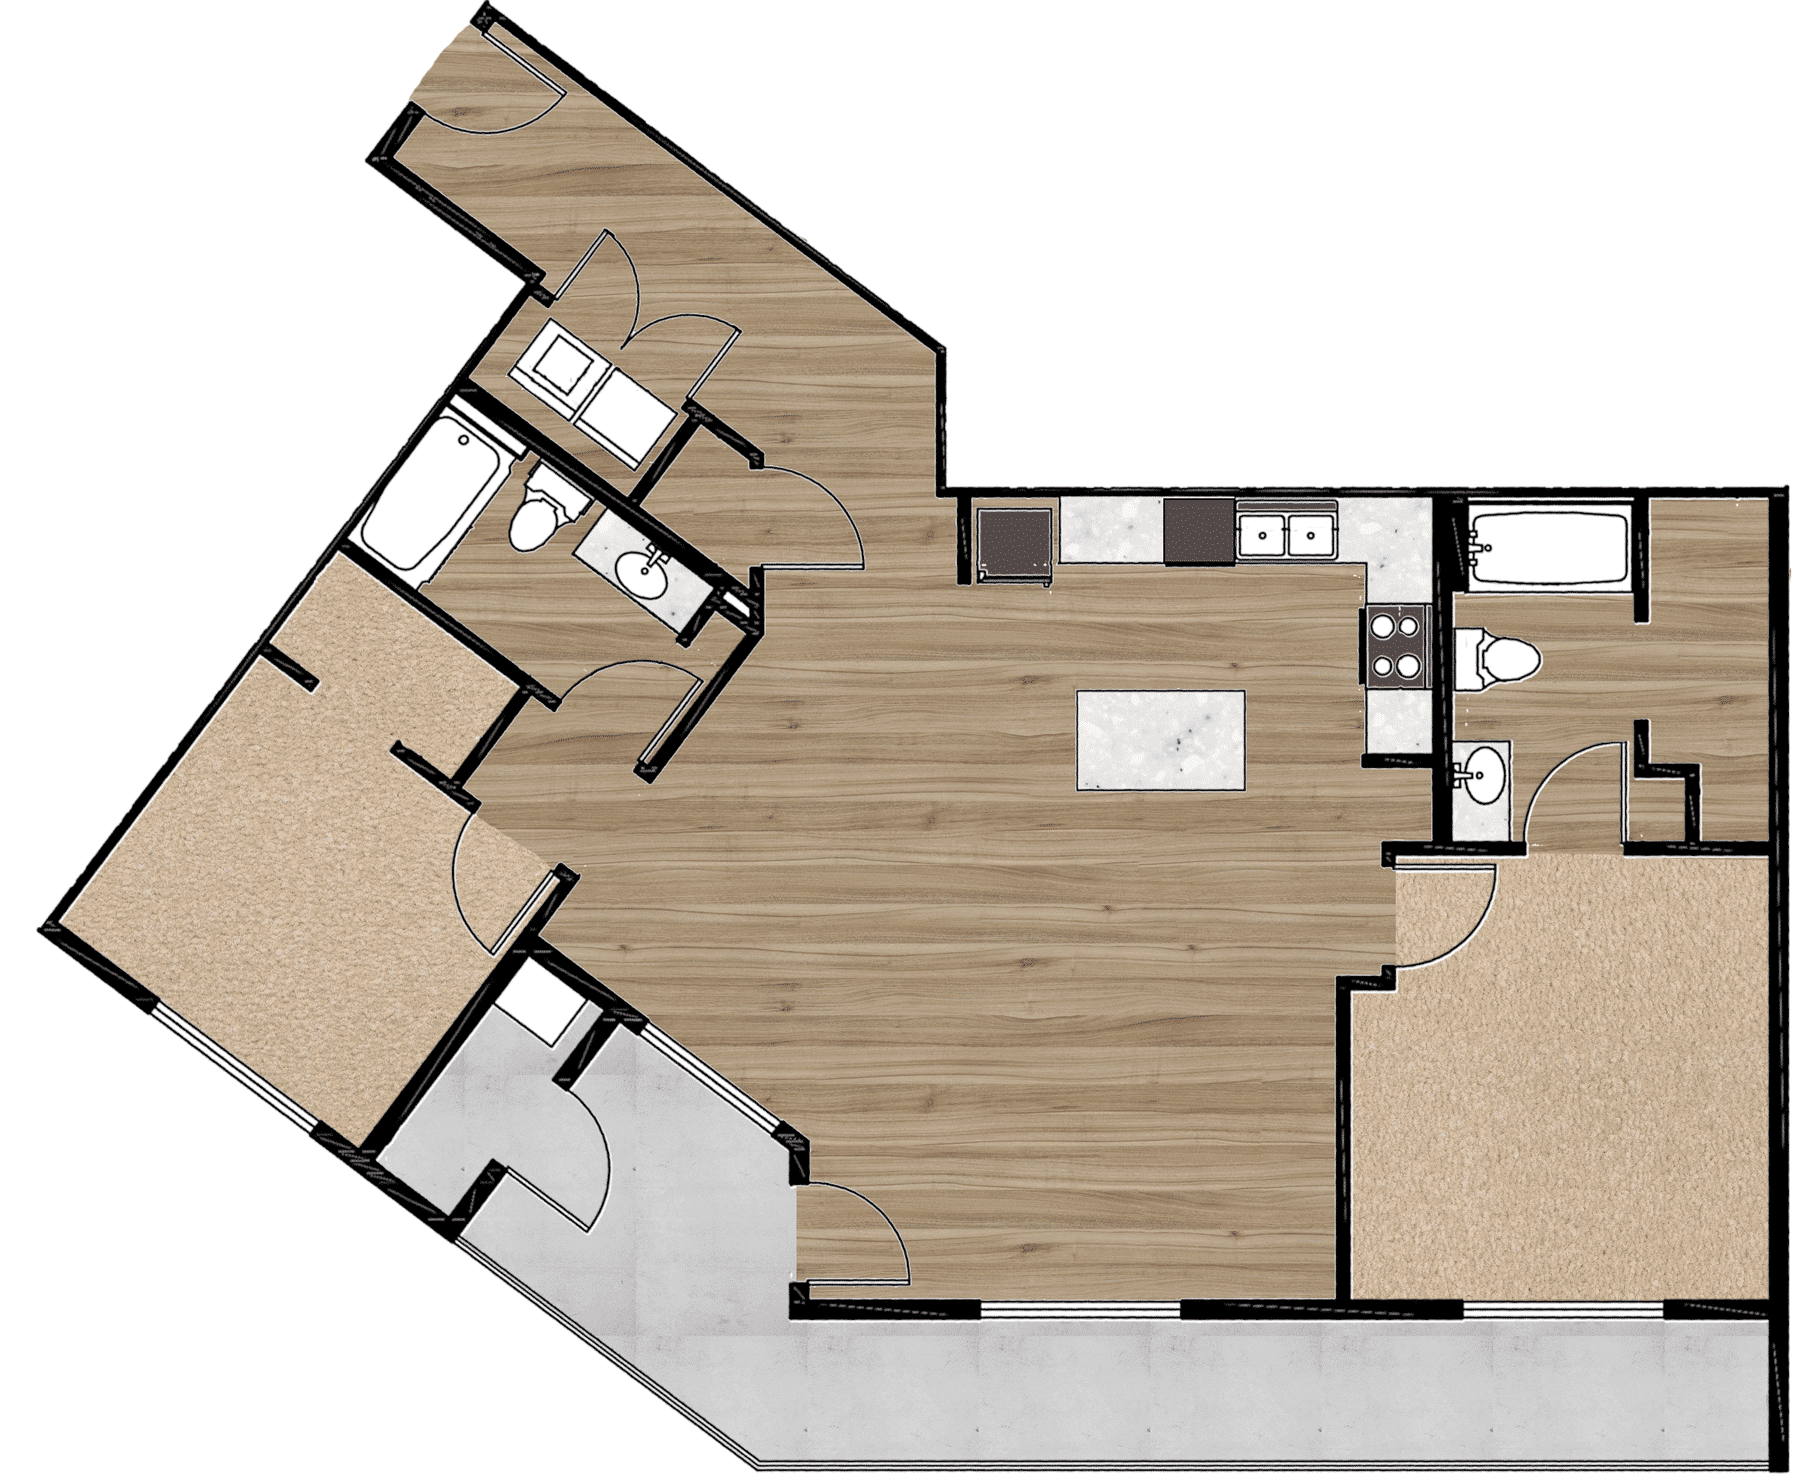 Draper apartment floor plan